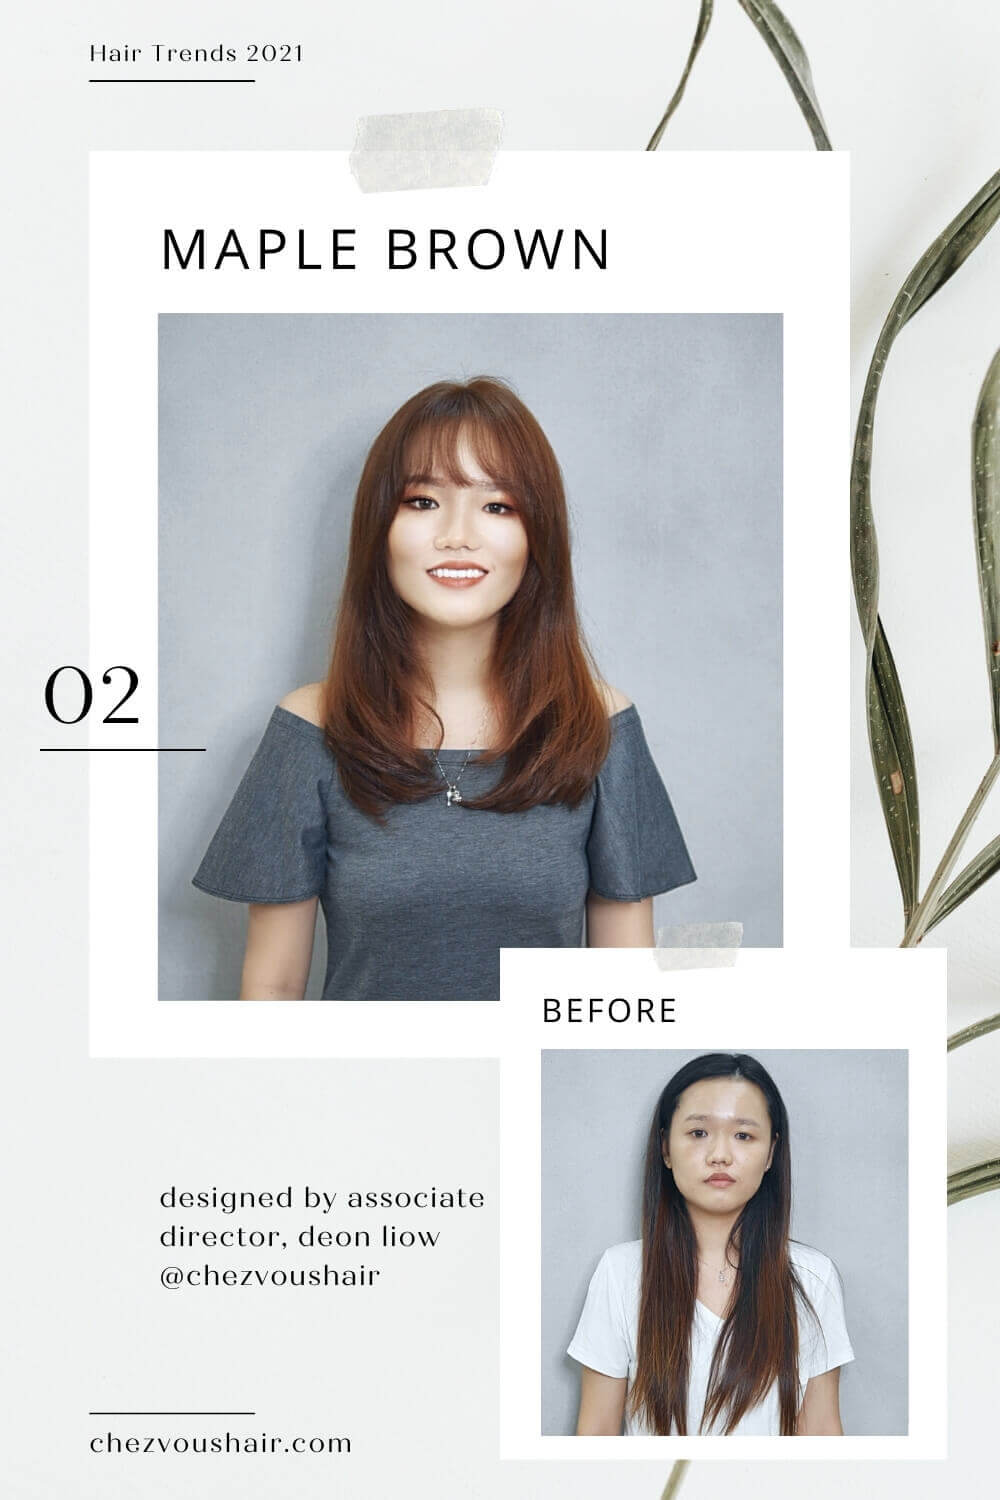 Hair Trends 2021: Maple Brown is Raging in Asia